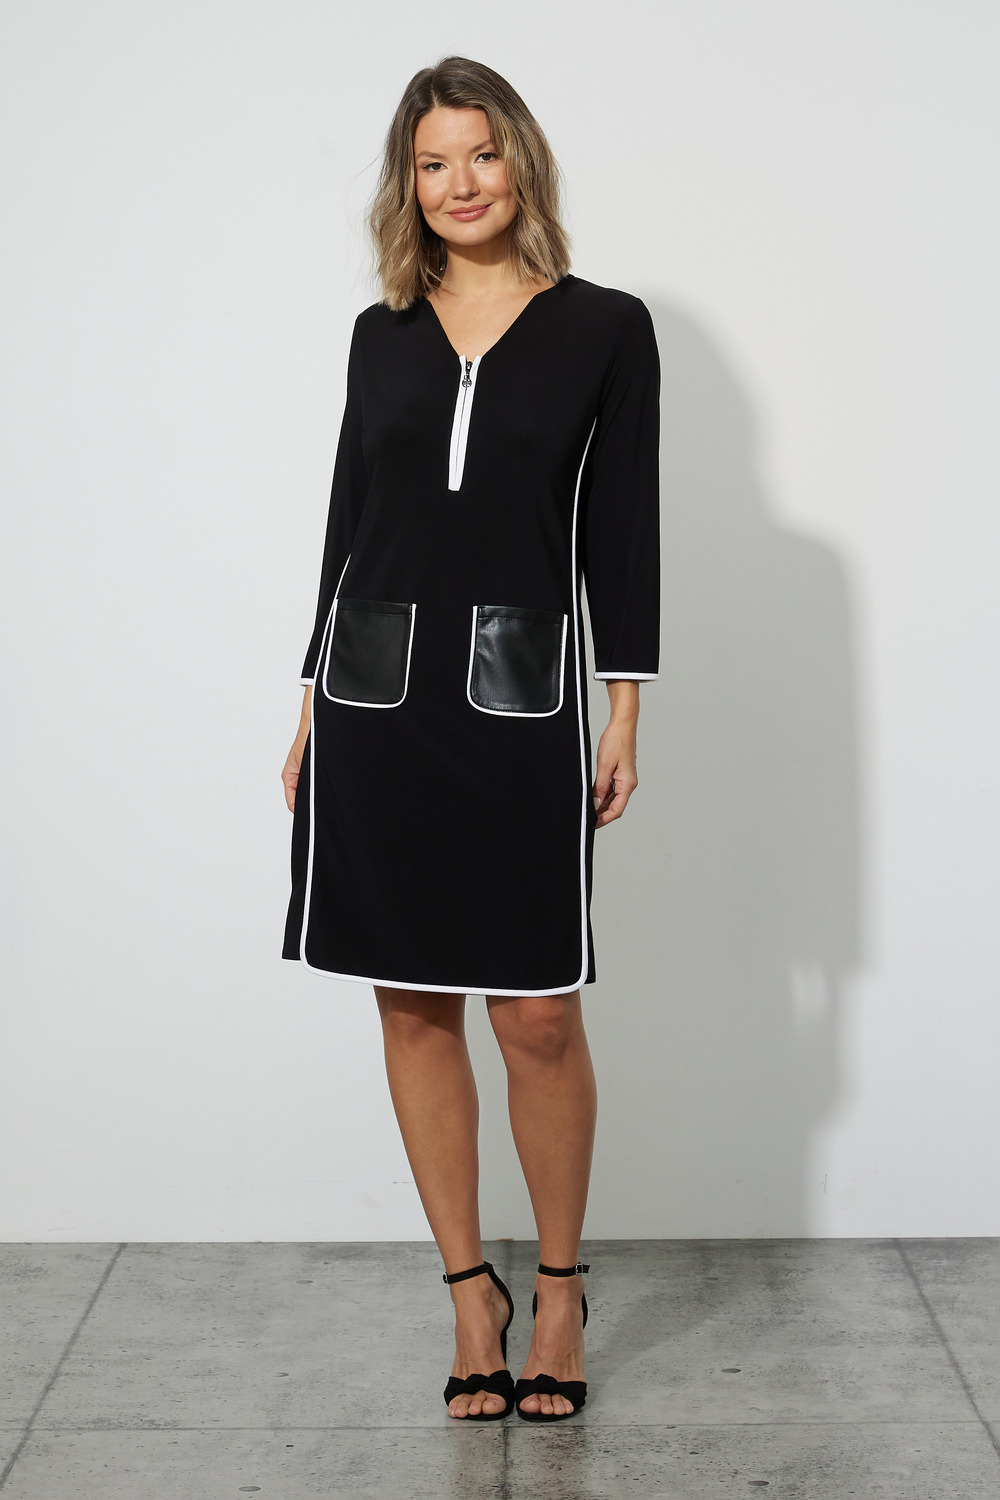 Joseph Ribkoff Contrast Detail Dress Style 223240. Black/vanilla